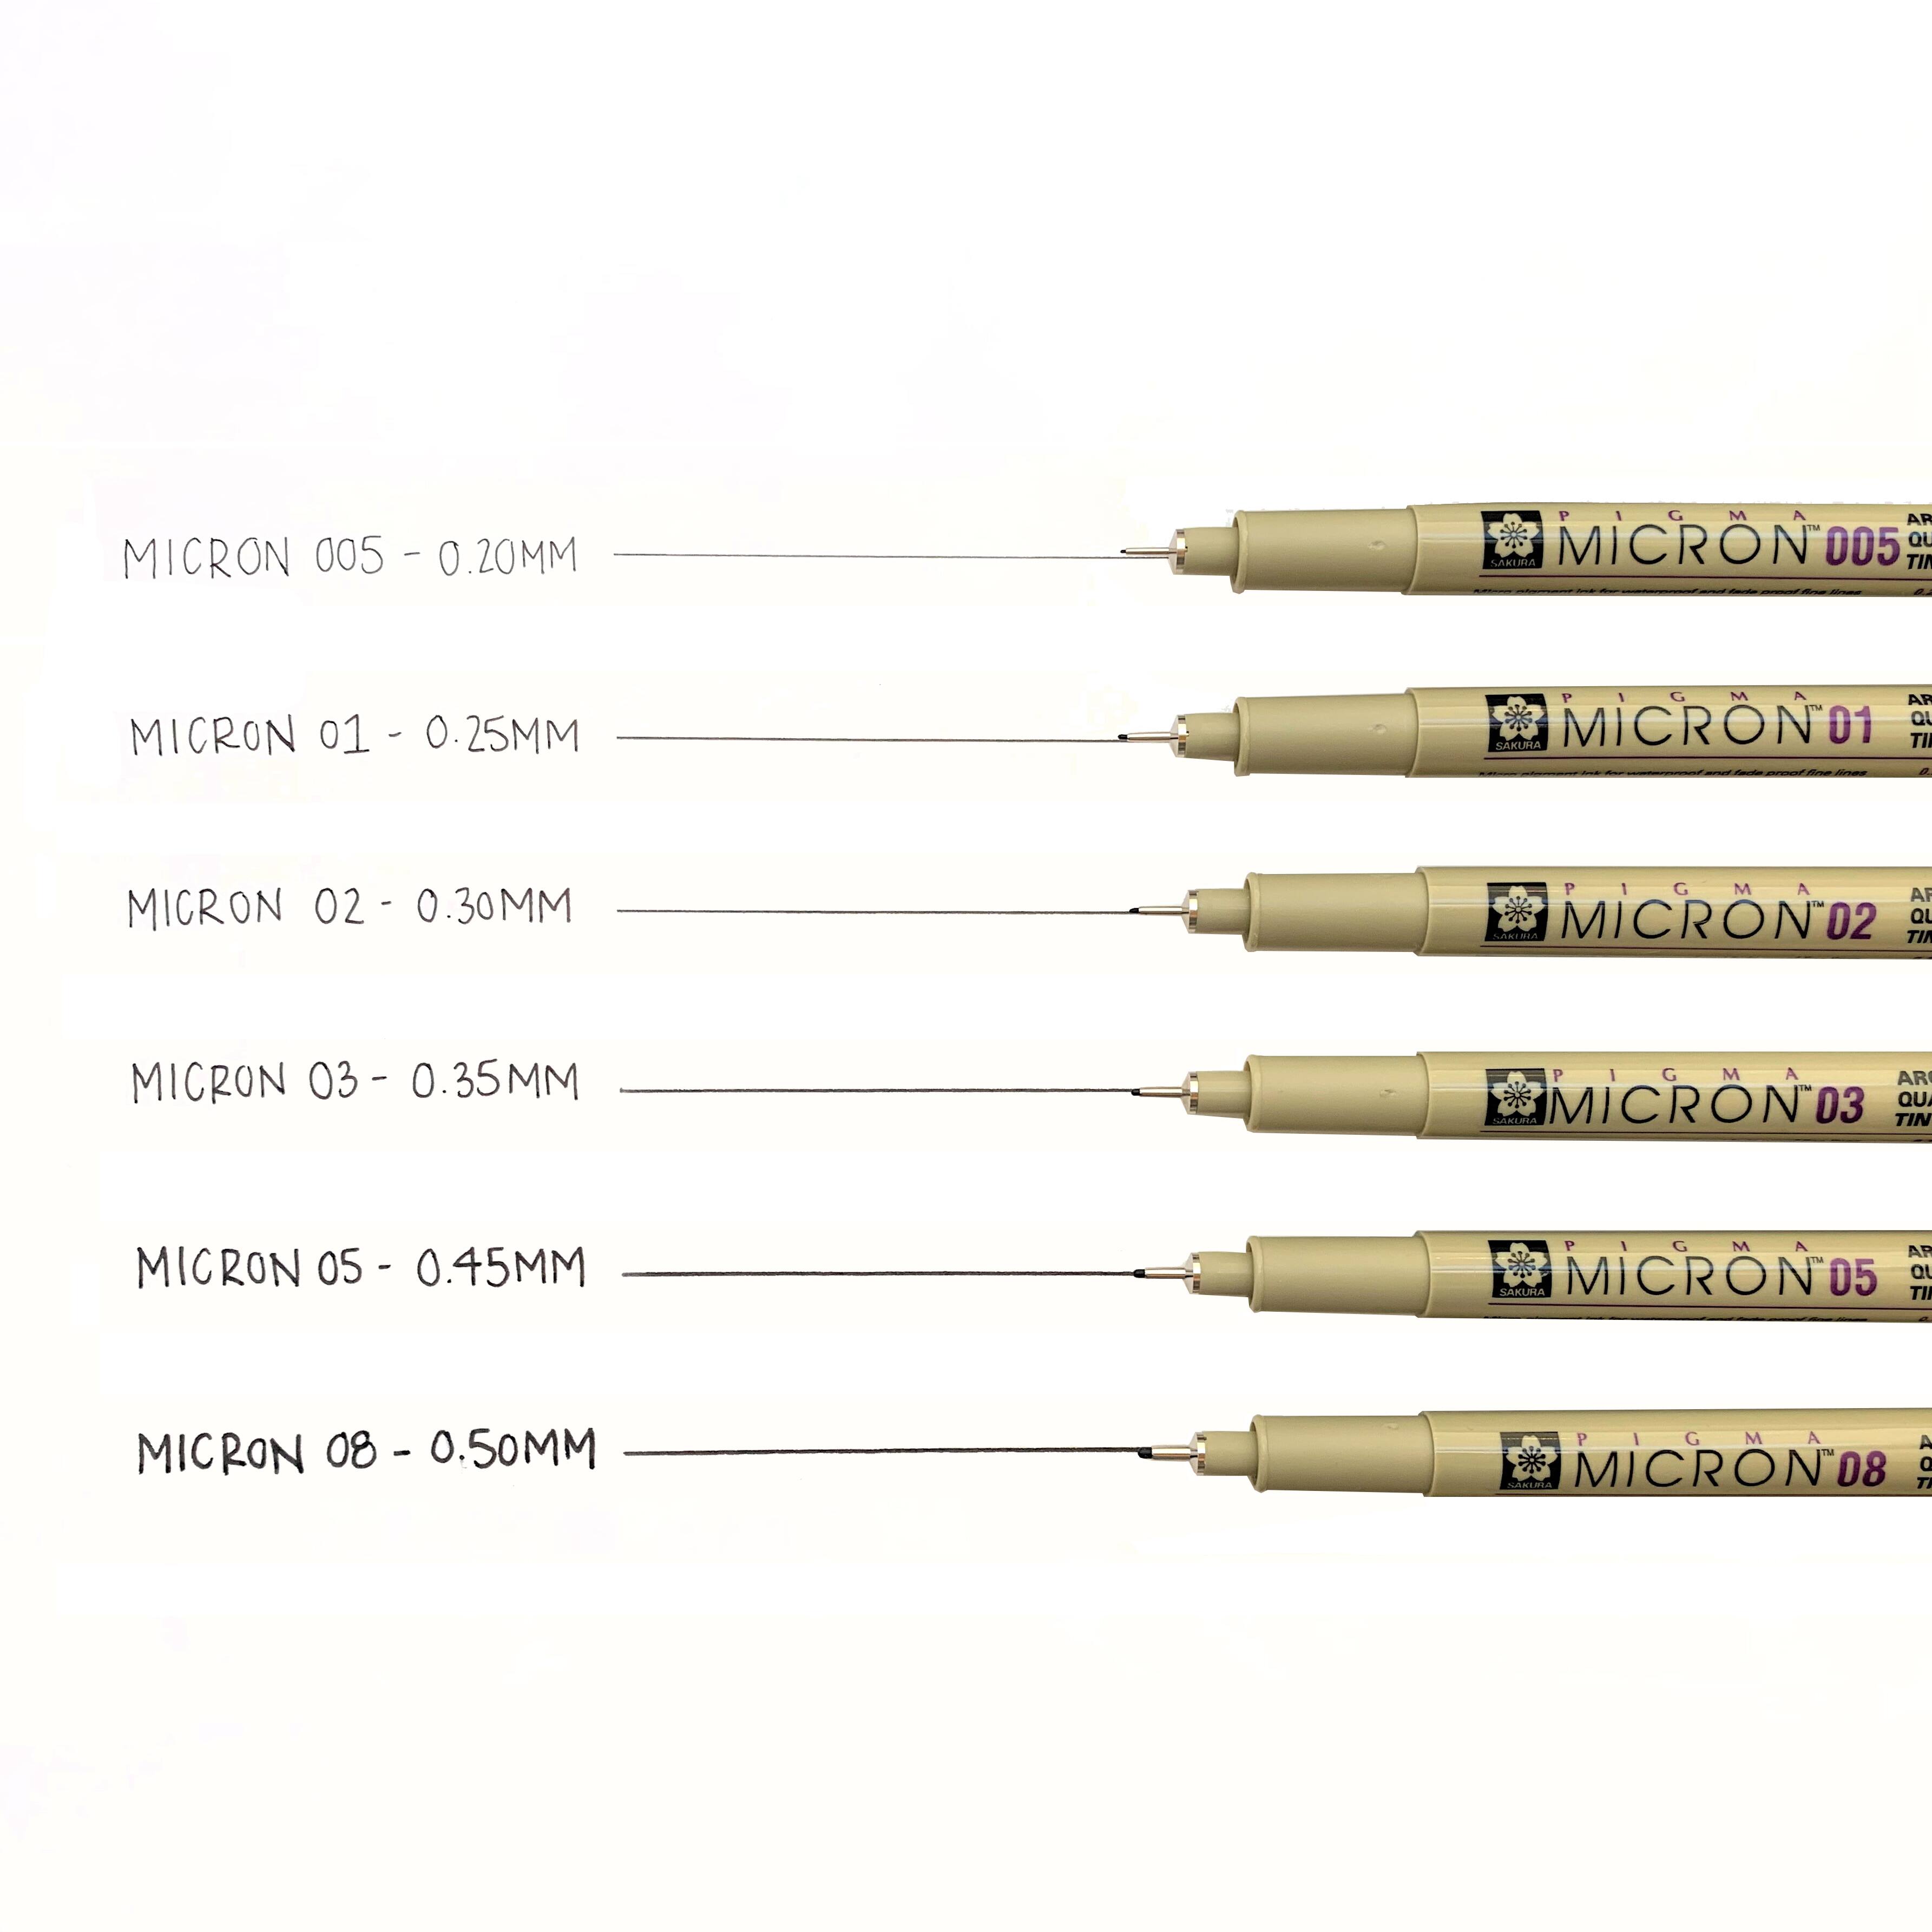  Sakura Pigma Micron 05 Black Pen 0.45mm Line Width Pack of 4  (05) : Arts, Crafts & Sewing